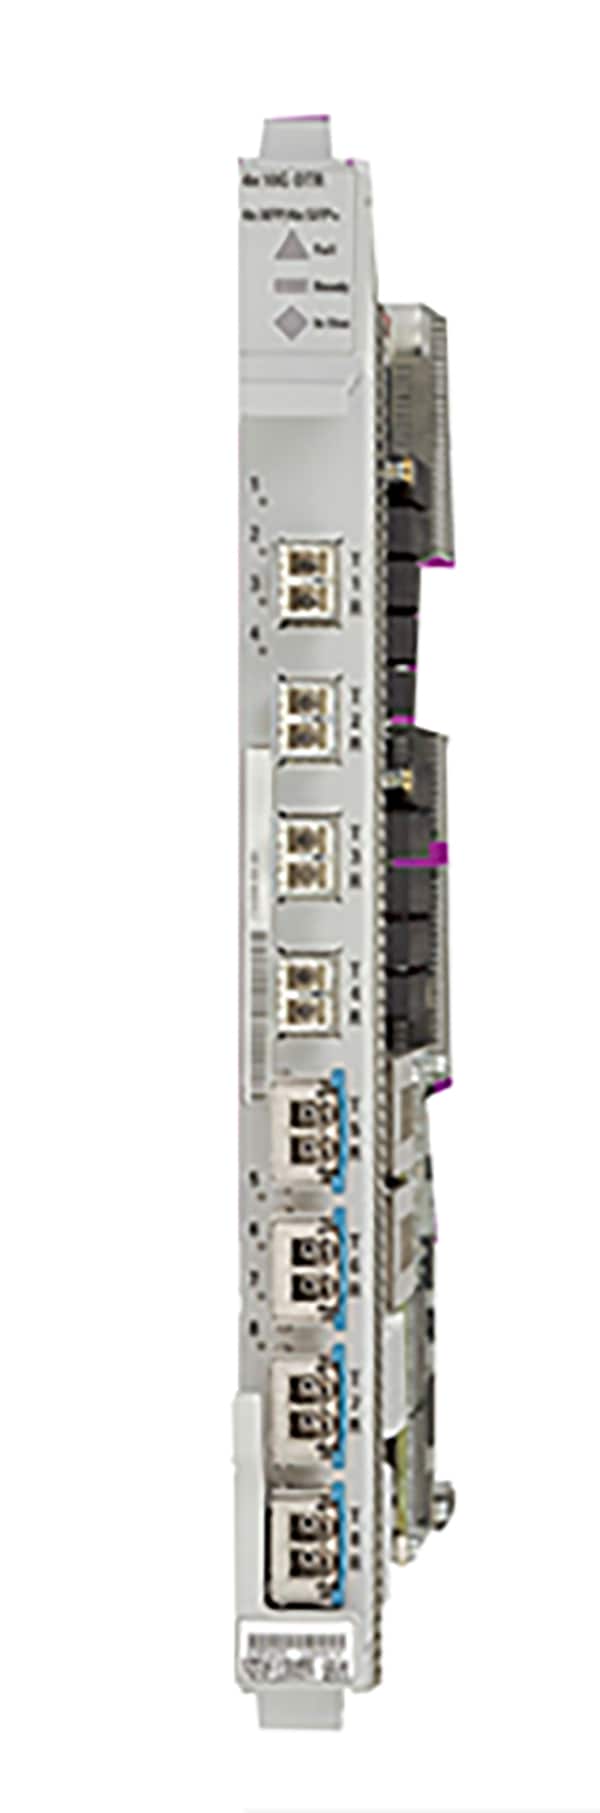 Ciena 4x10G Optical Transponder with 4x XFP/4x SFP+ Encryption for 6500 Pac